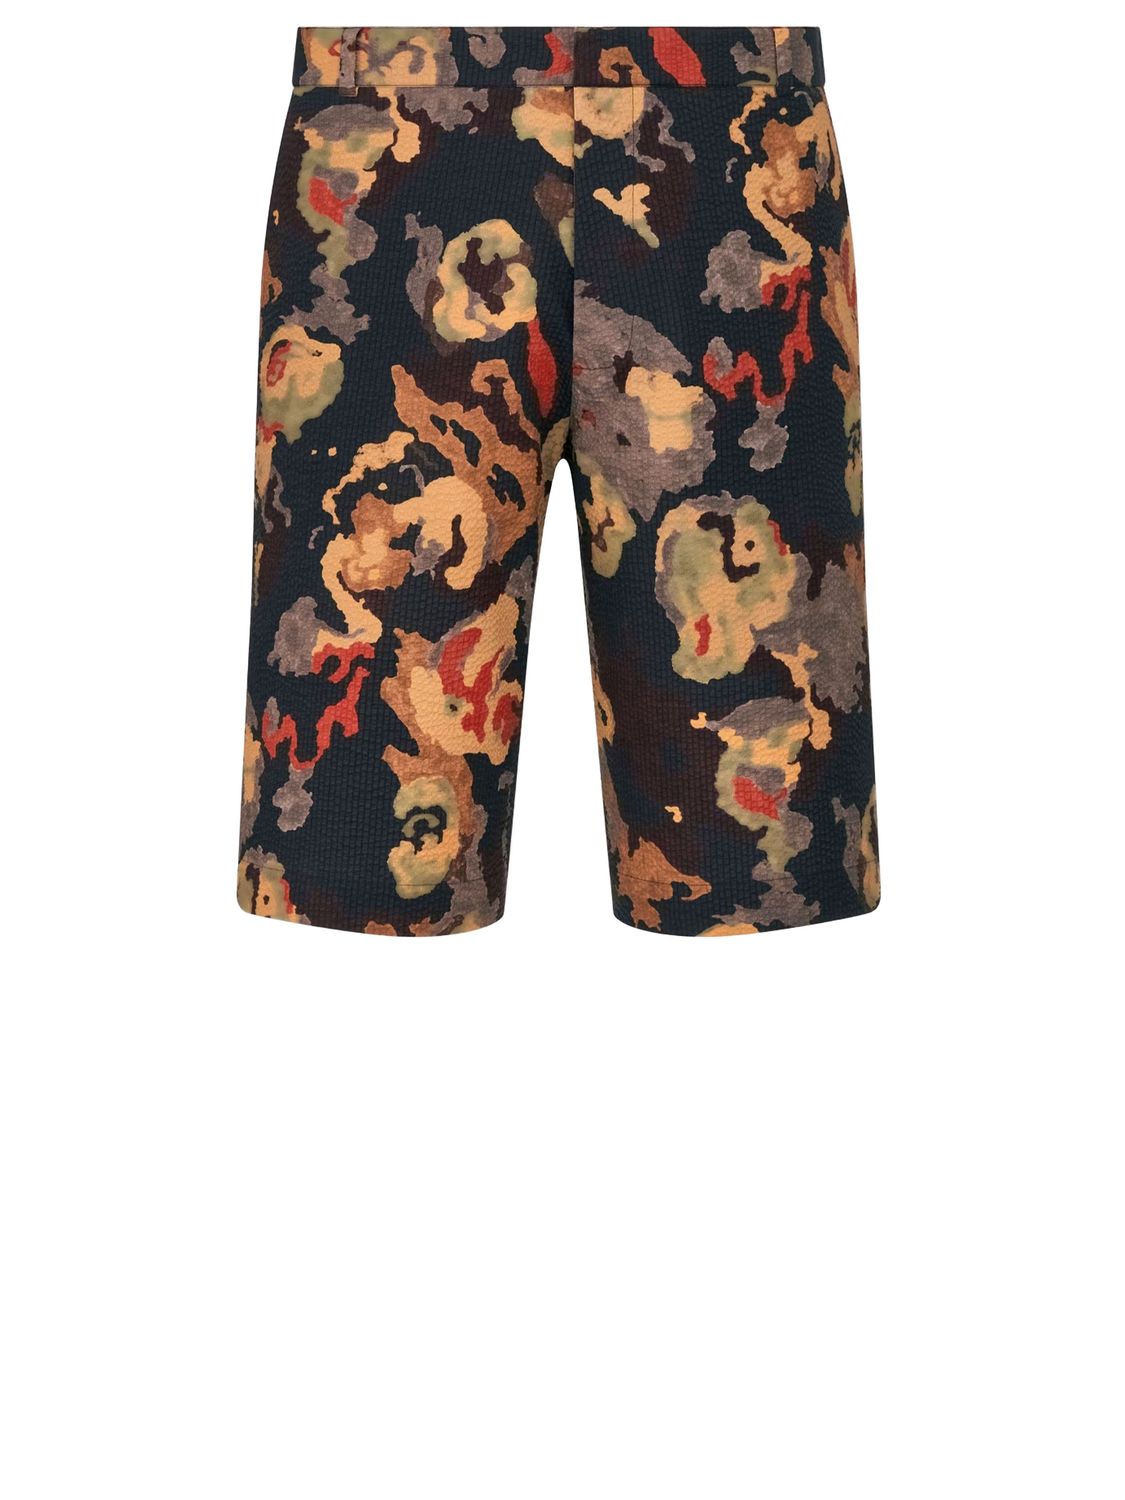 Shop Dior Men's Multicolor Seersucker Bermuda Shorts From The Charleston Collection